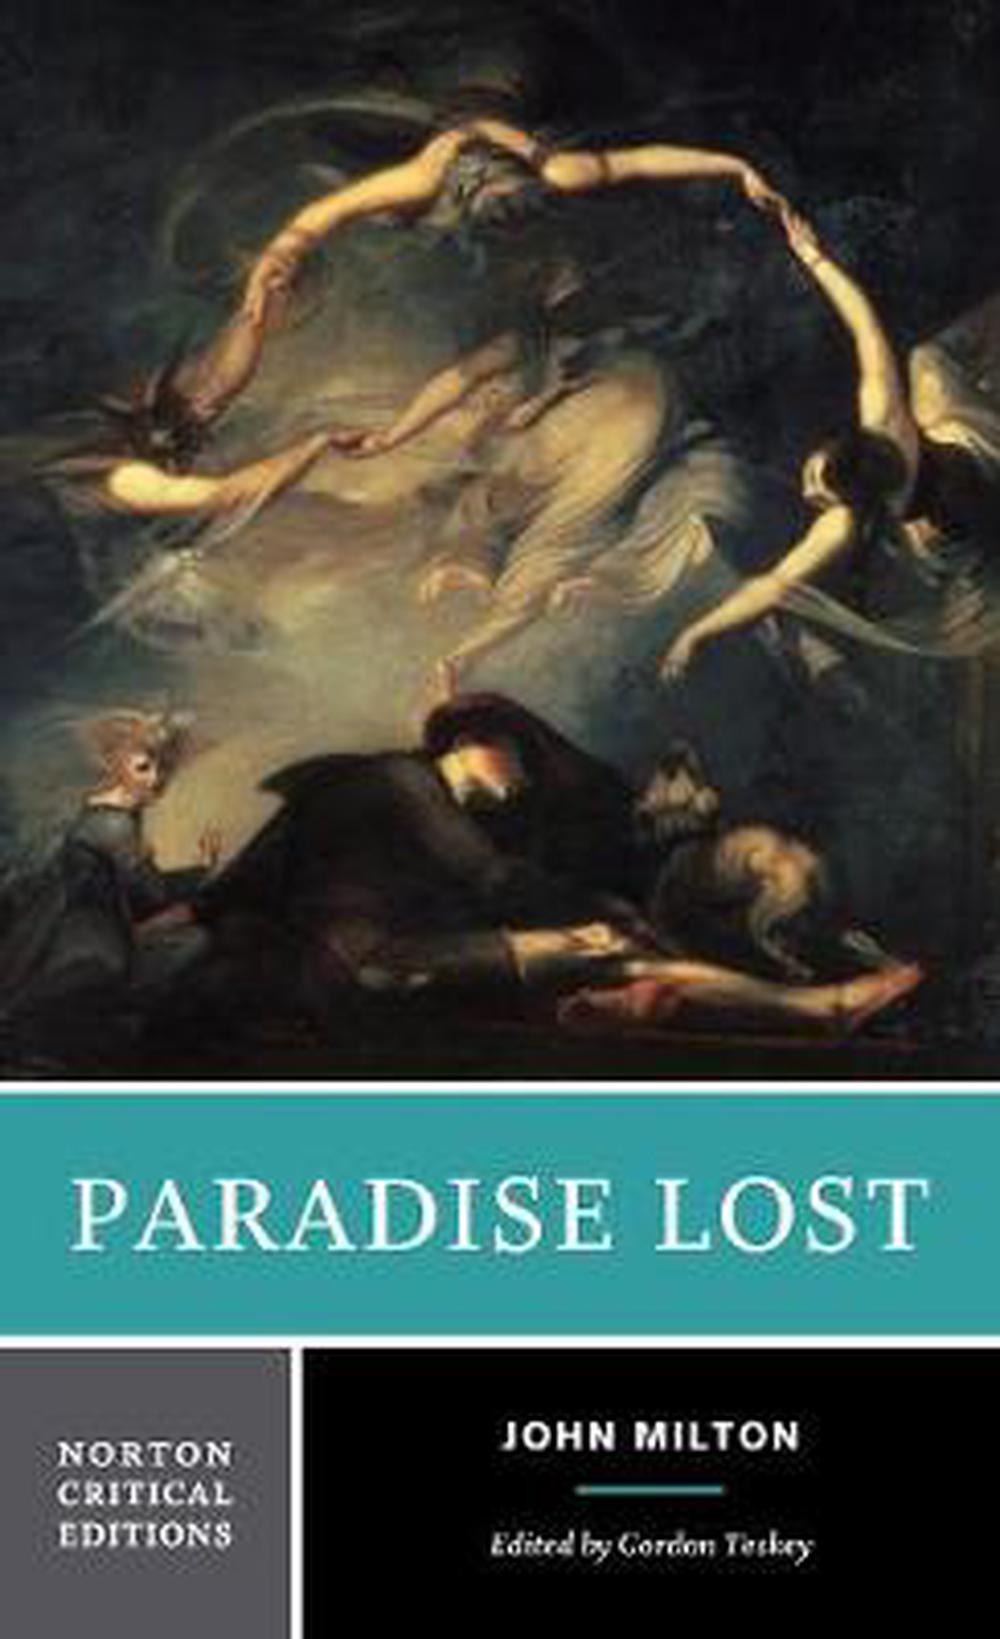 paradise lost by john milton